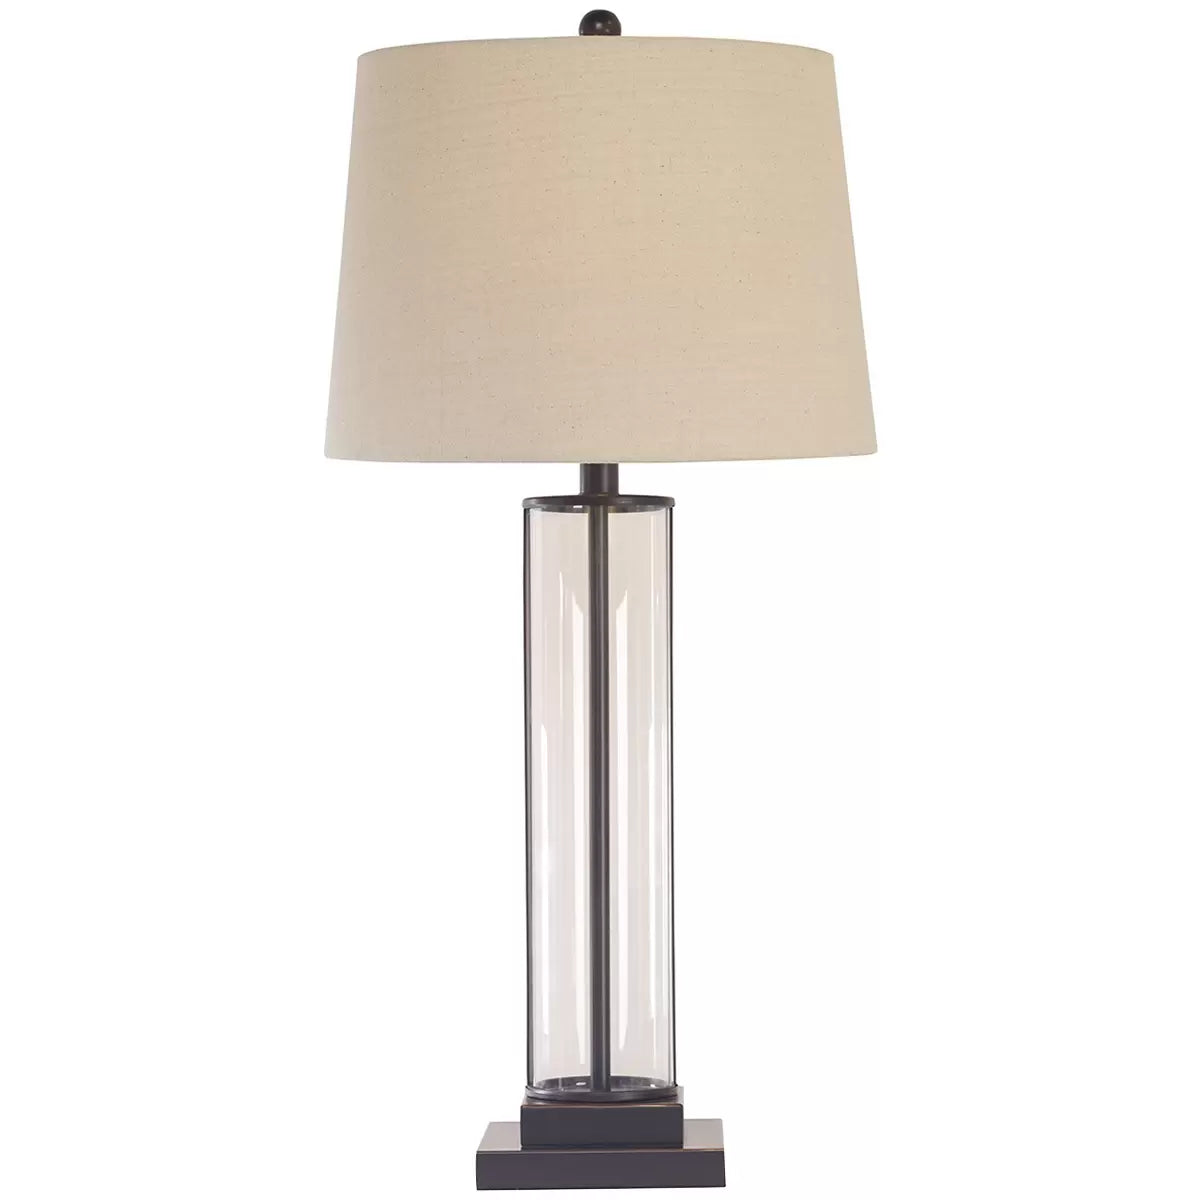 Costco Paris Glass Table Lamp - 2 In 1